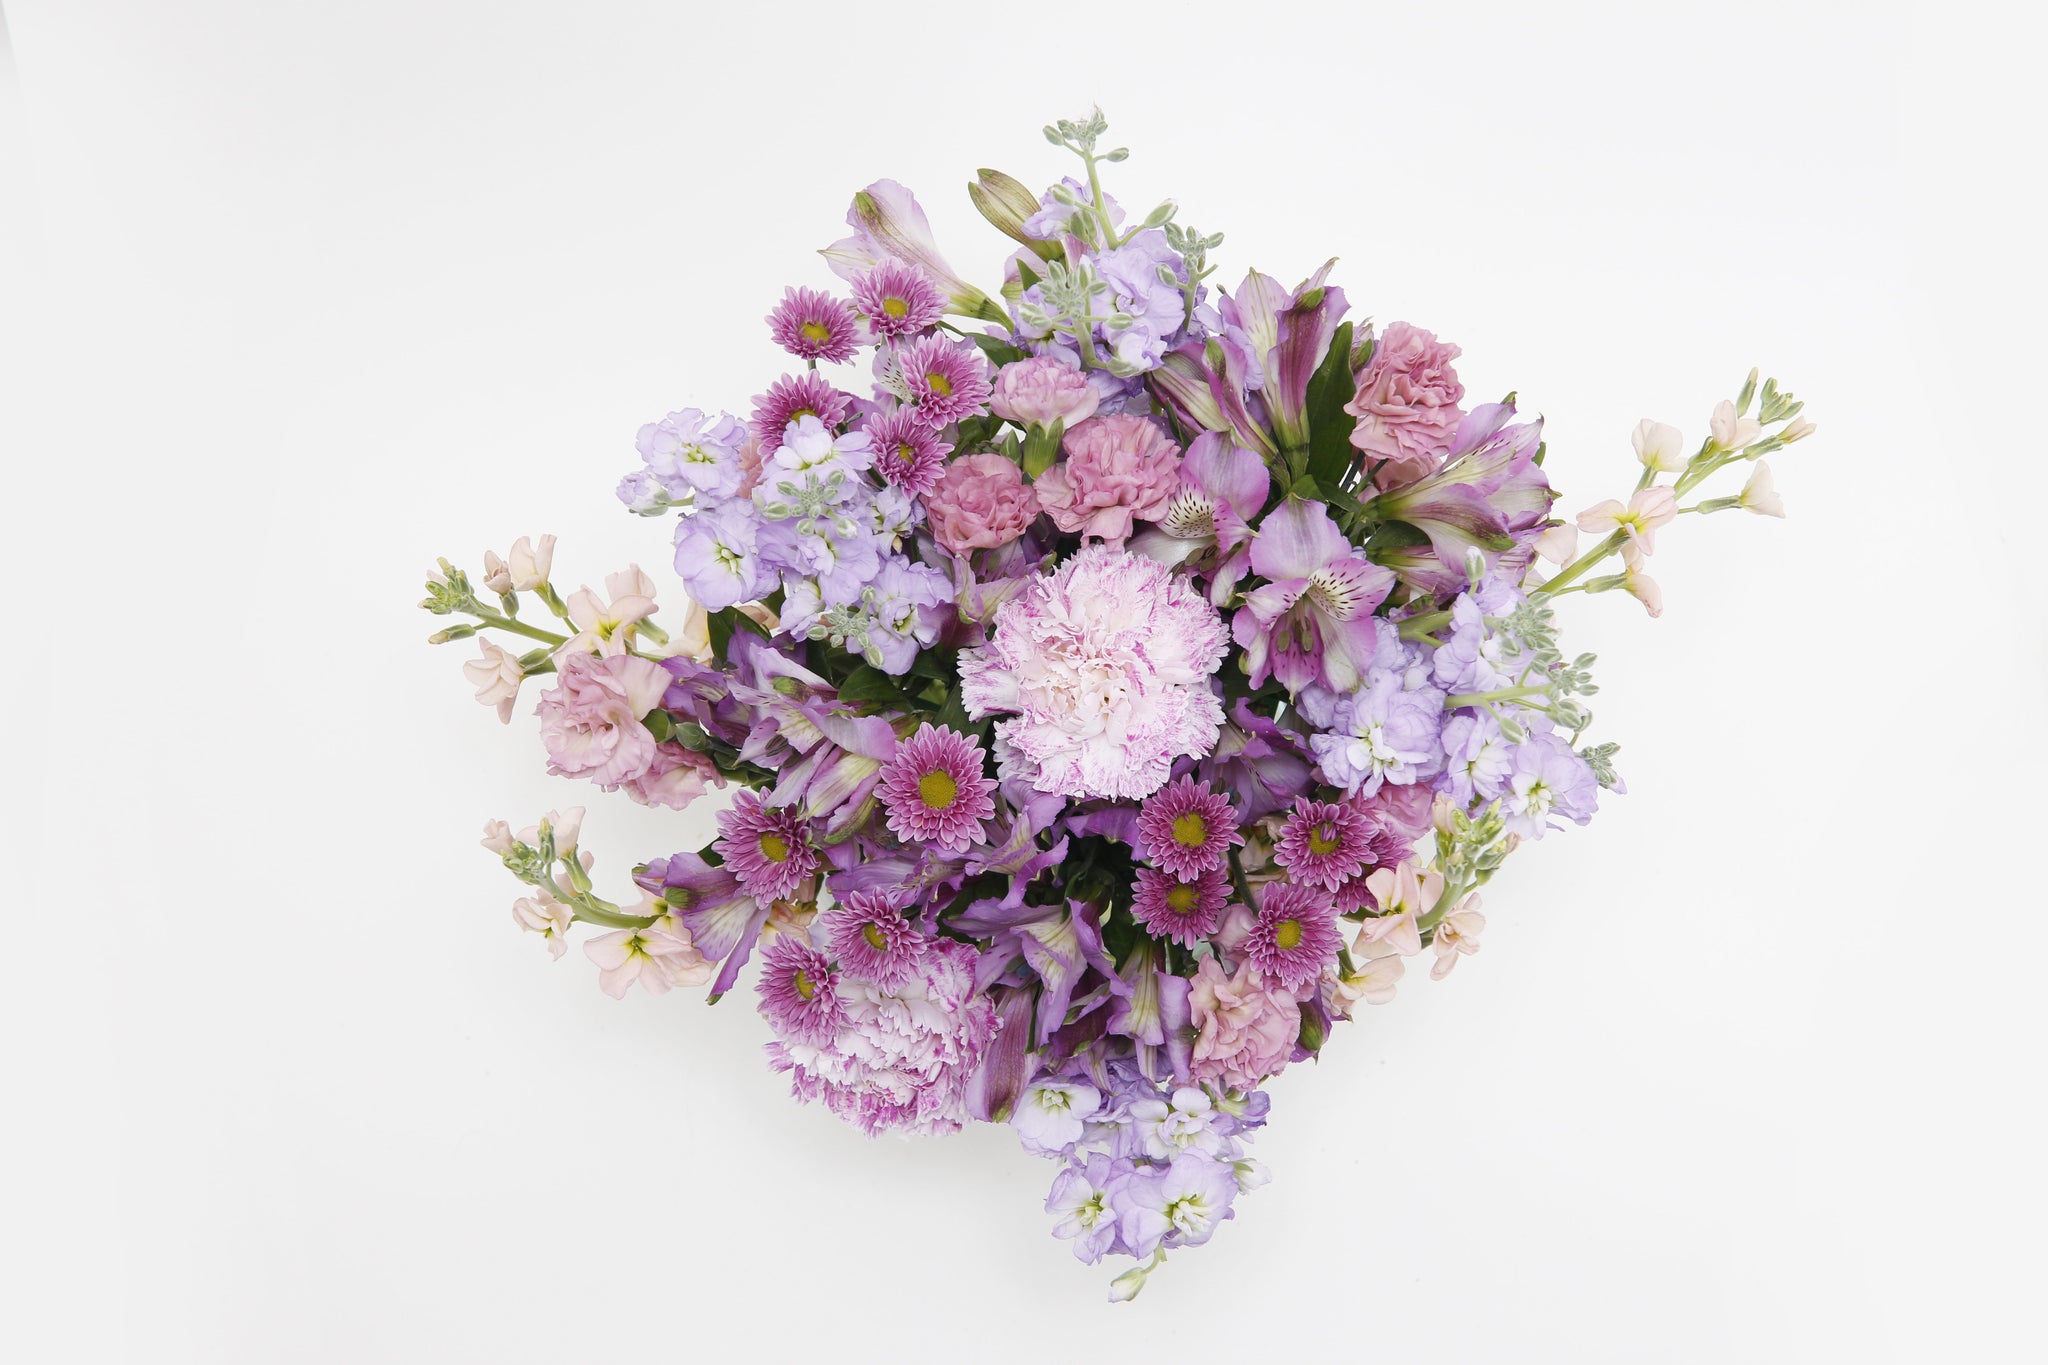 Delightful Discoveries Bouquet Top - lavender stock flowers, cream stock flowers, pink novelty carnations, purple alstroemeria flowers, purple button mums